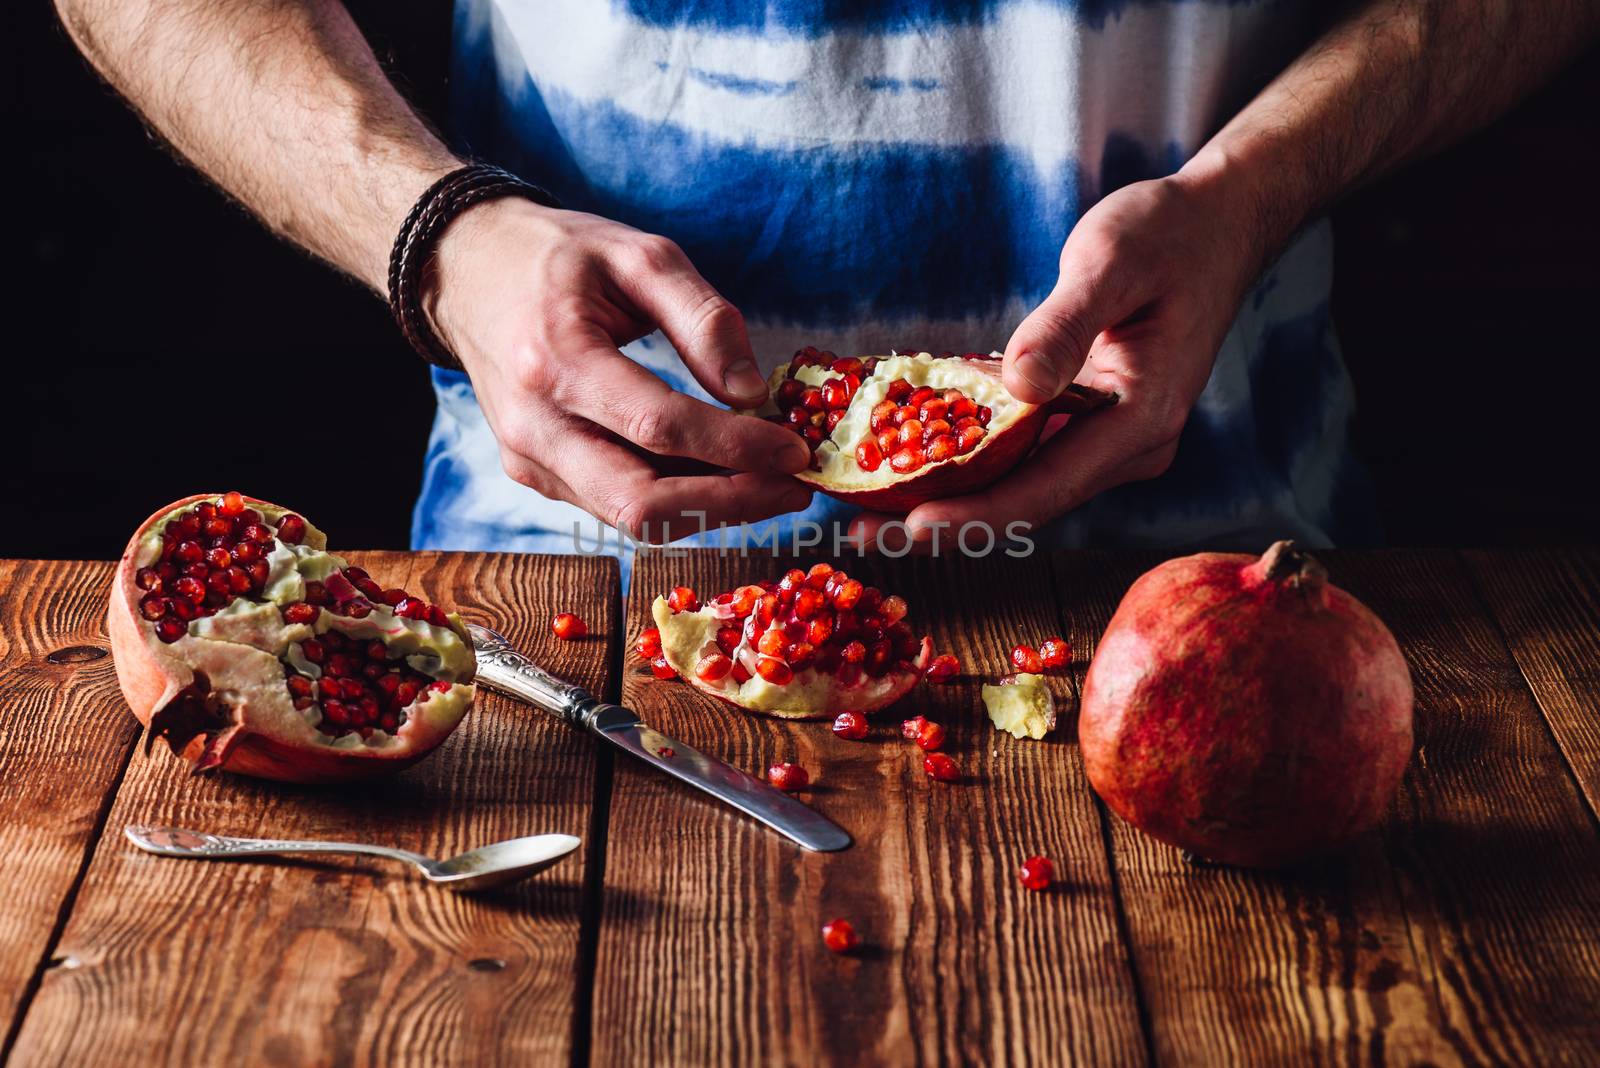 Opened Pomegranate Fruit in Hands by Seva_blsv